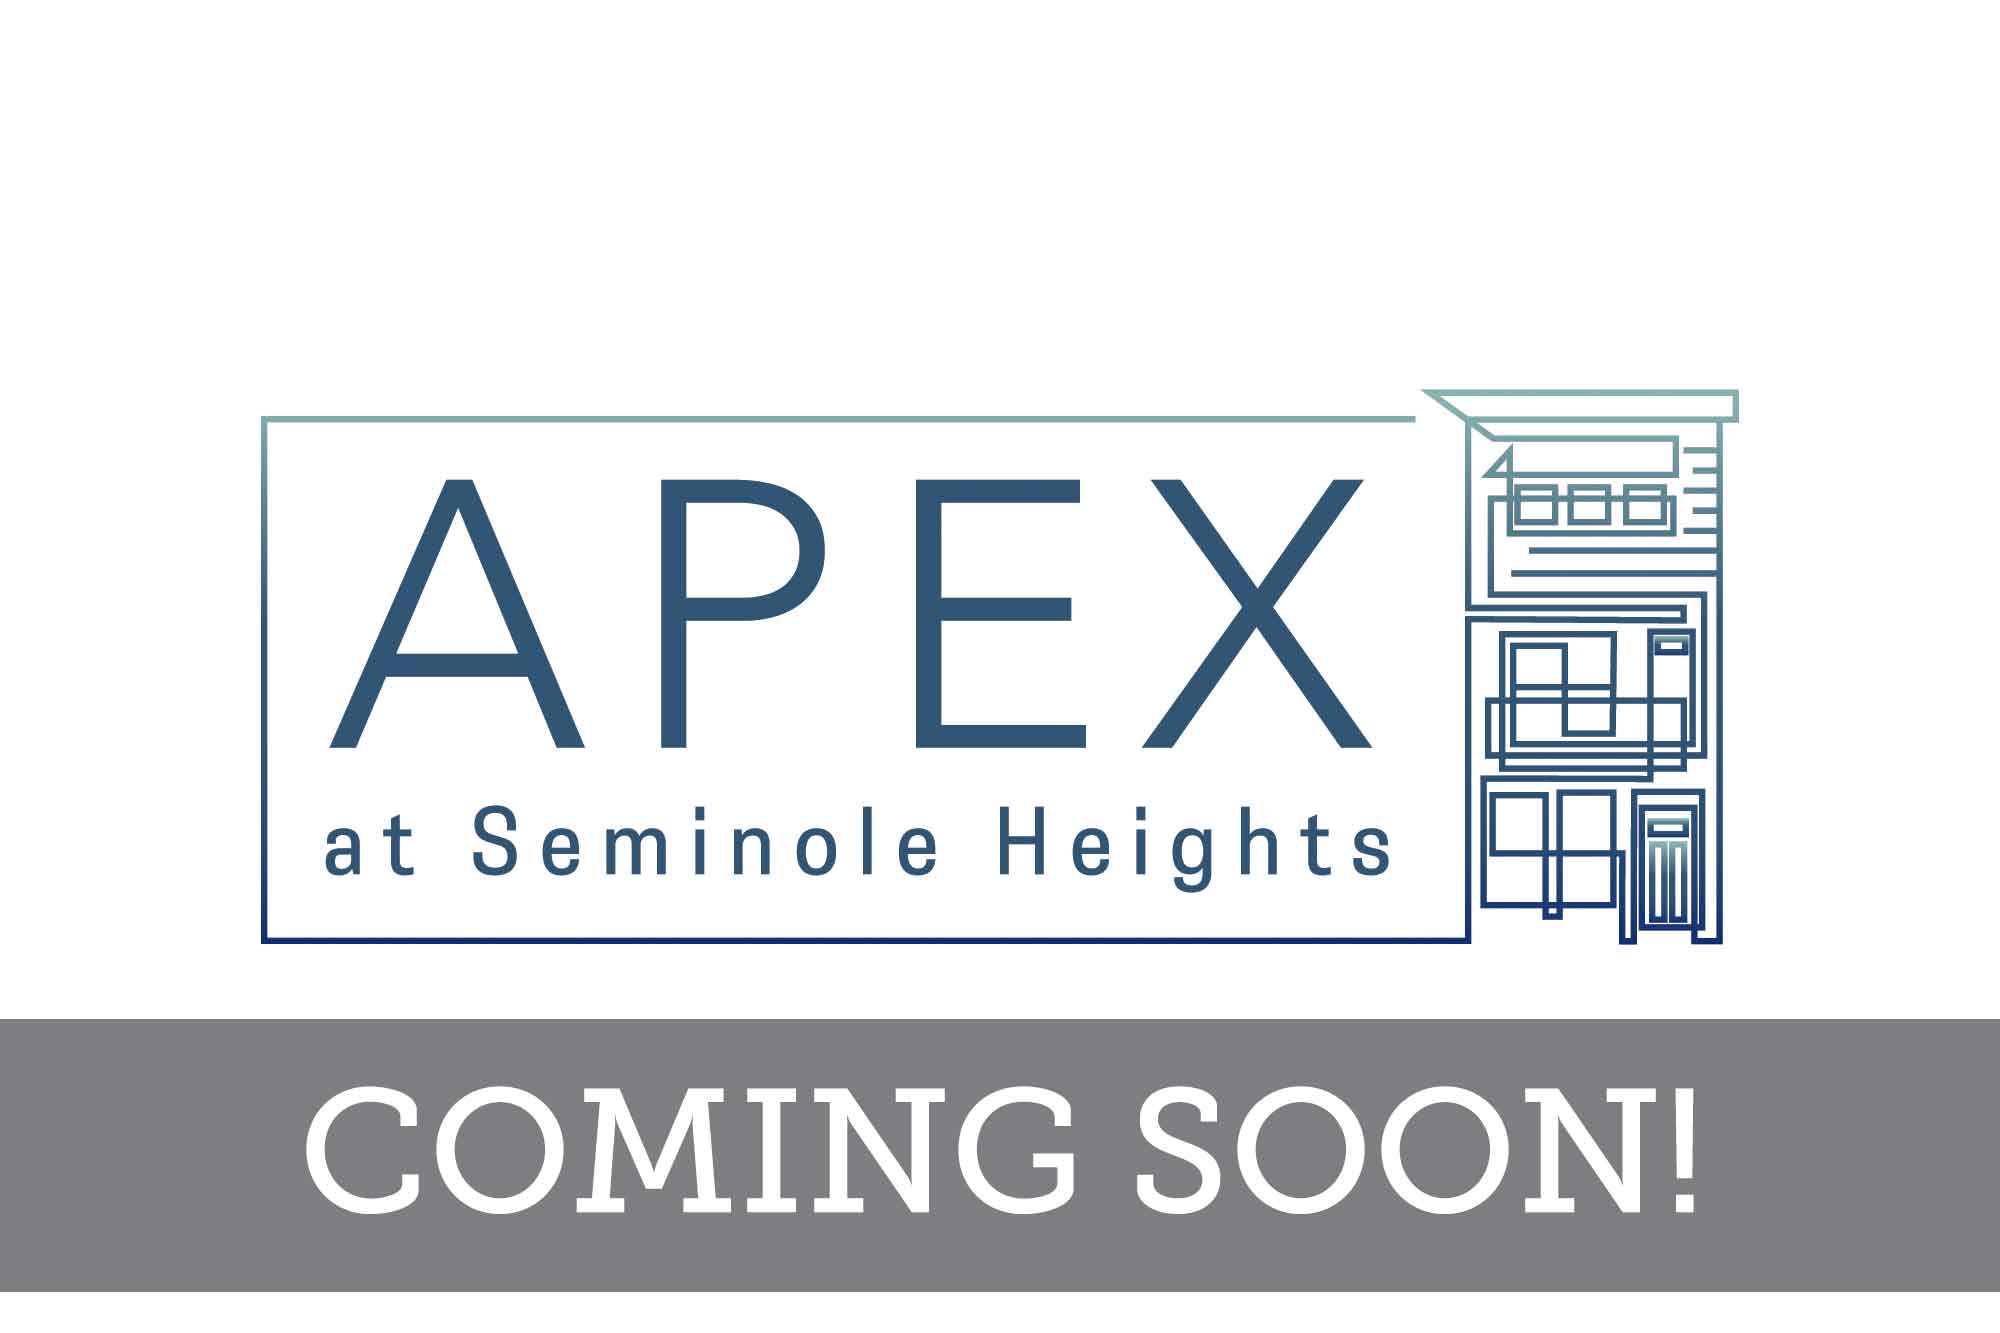 Apex at Seminole Heights - Coming Soon